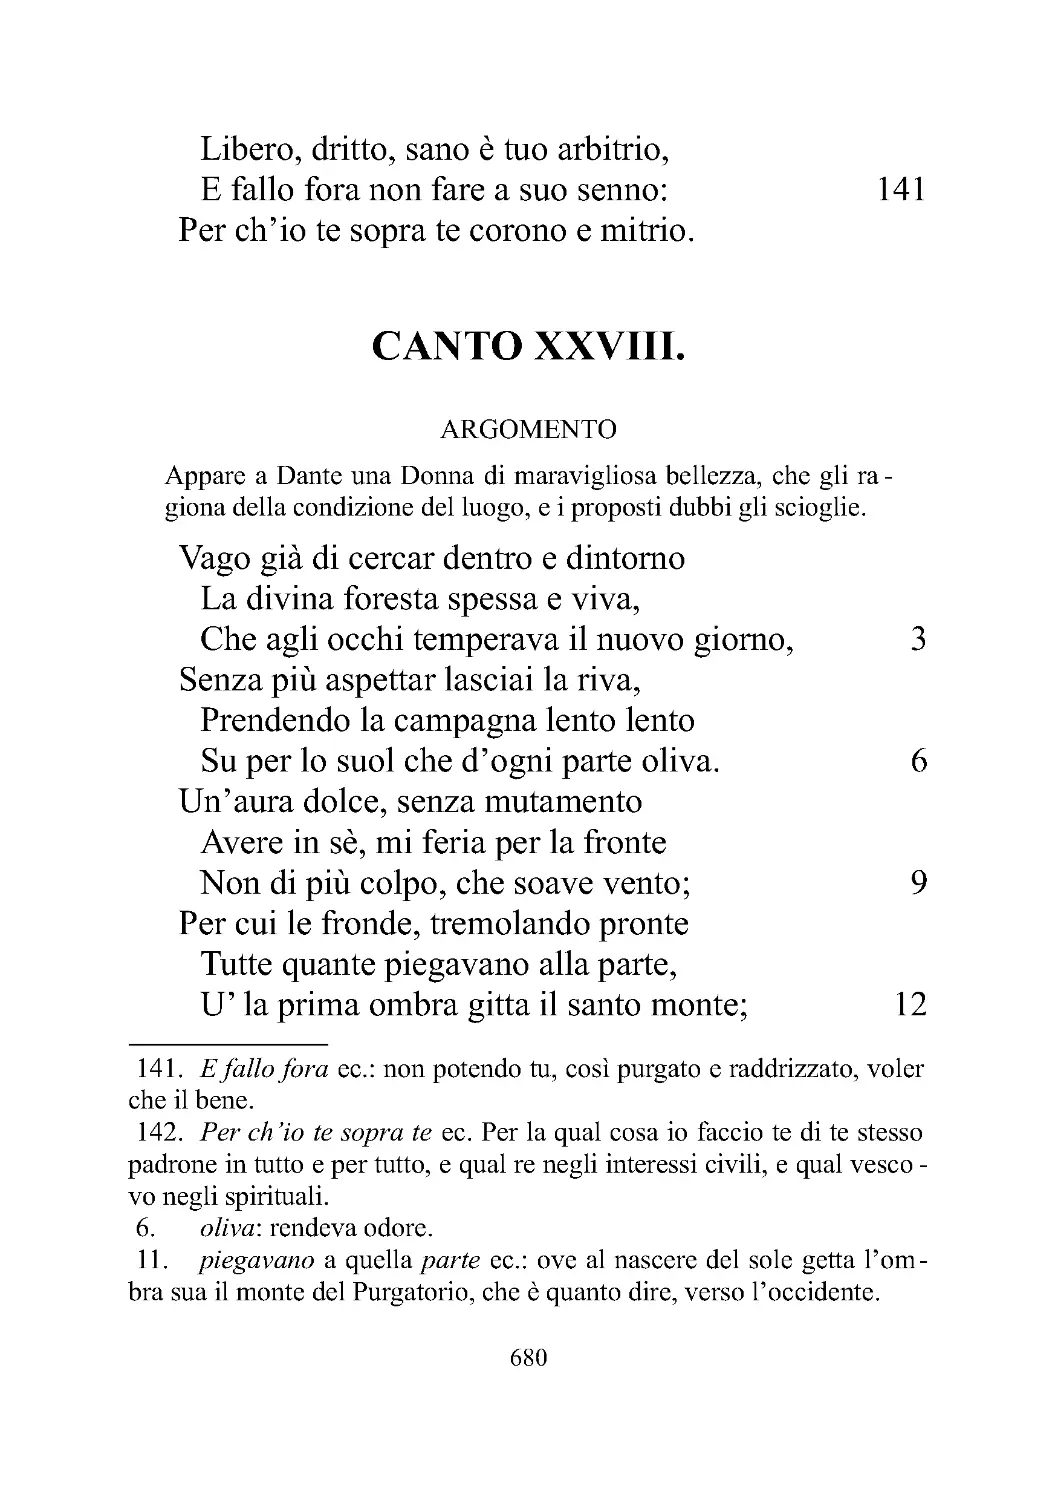 CANTO XXVIII.